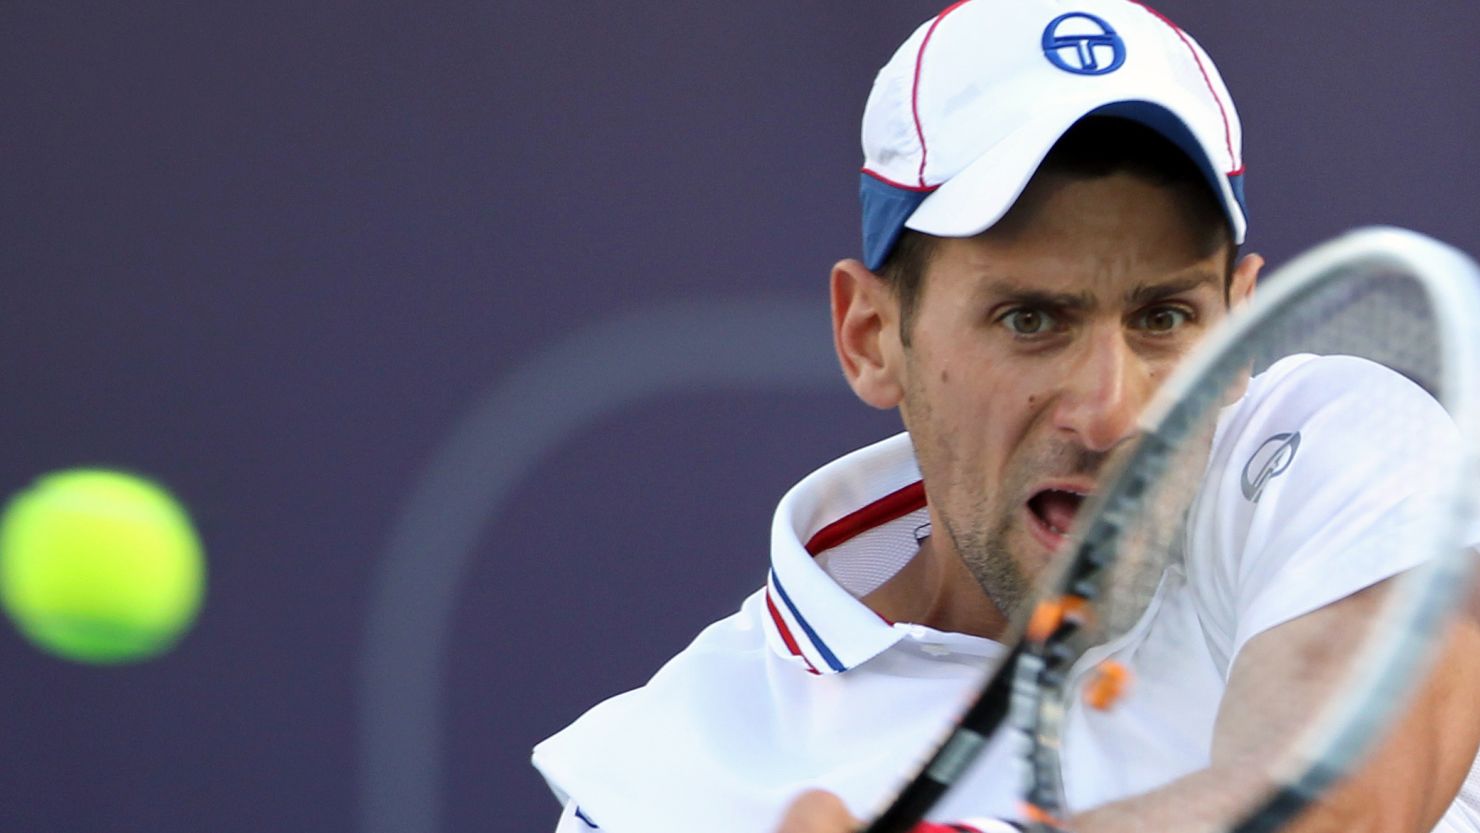 Novak Djokovic plays a return during his straight sets win over Sergiy Stakhovsky in Dubai.